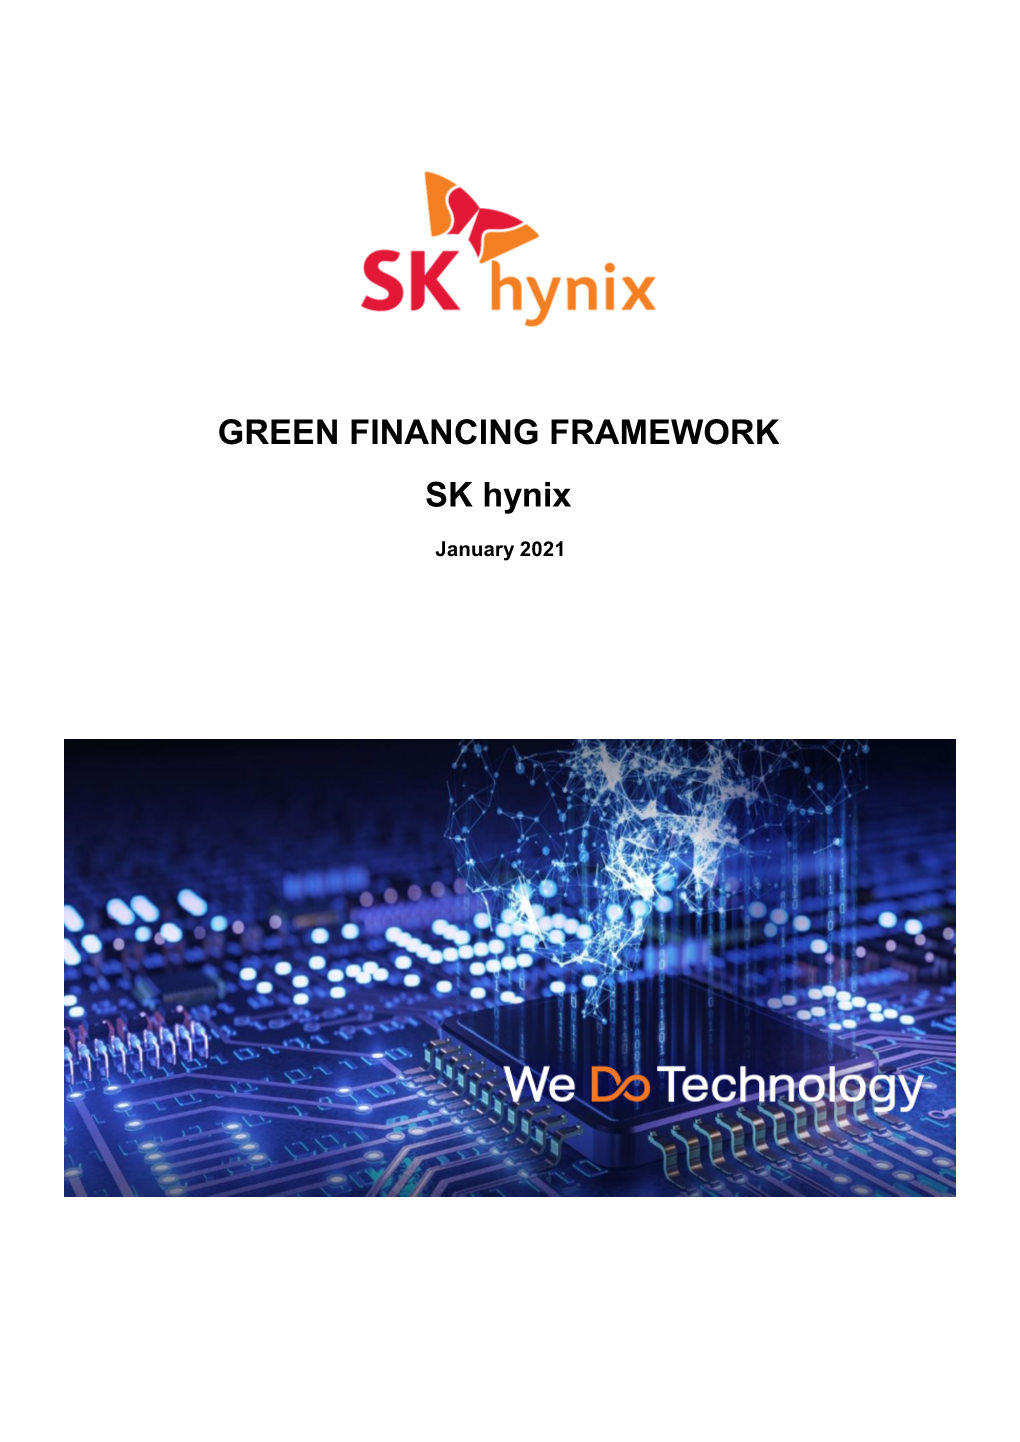 SK Hynix's Green Financing Framework